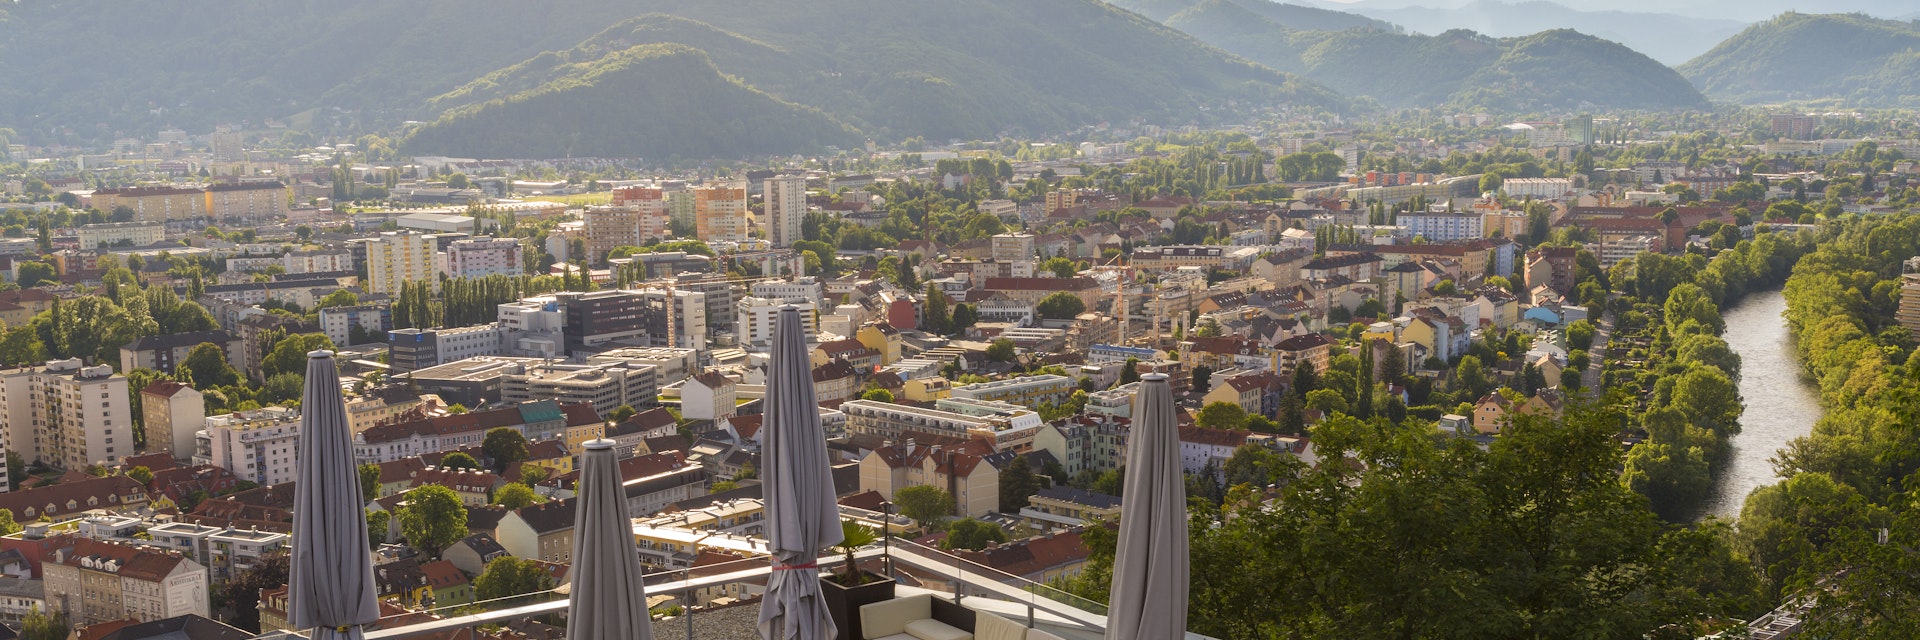 Cafe, Town View & Rooftops, Graz, Austria